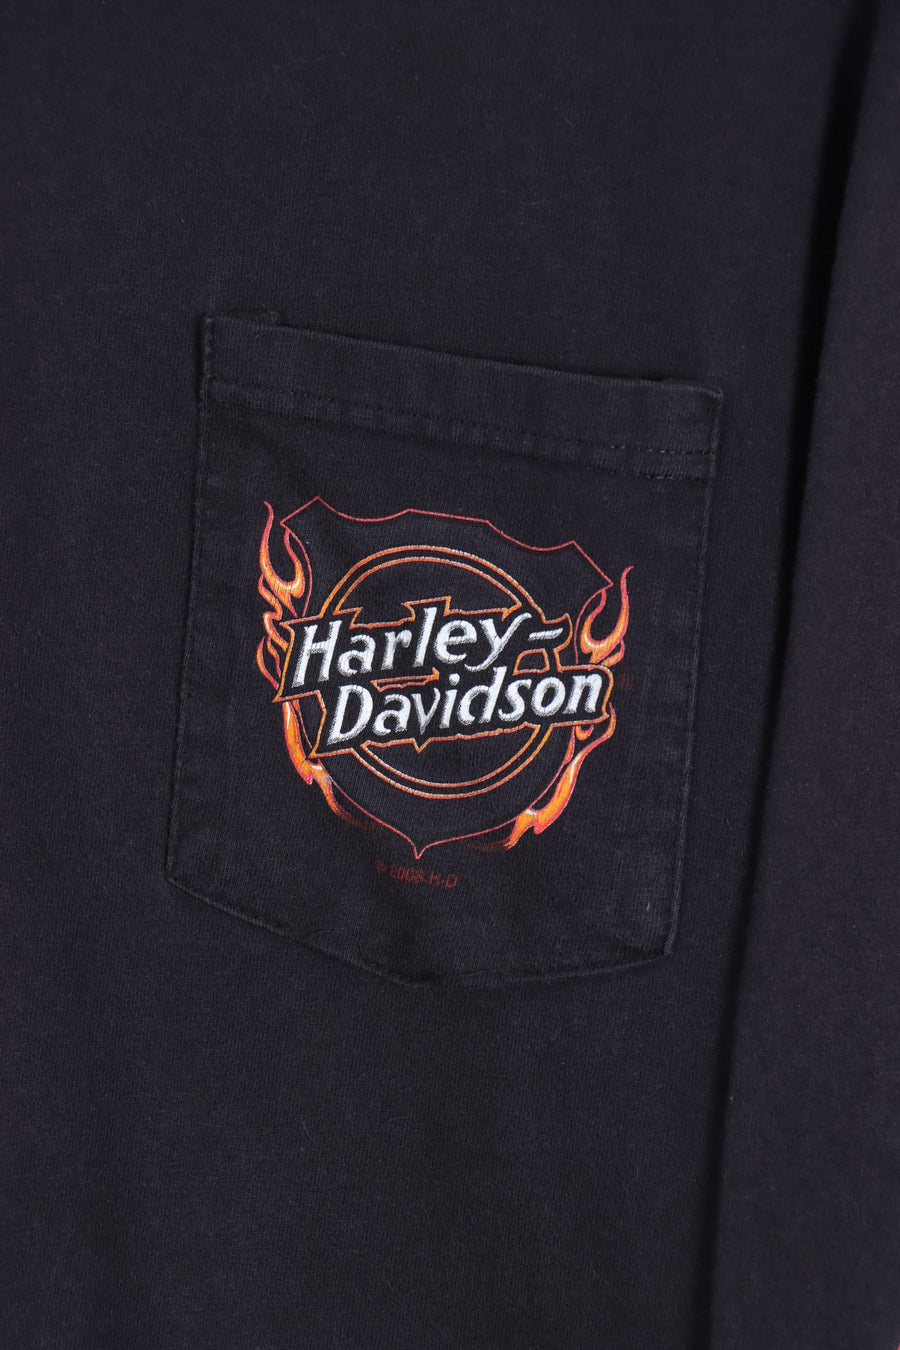 HARLEY DAVIDSON Don Waugh Eagle & Flame Detail Long Sleeve Tee (L)